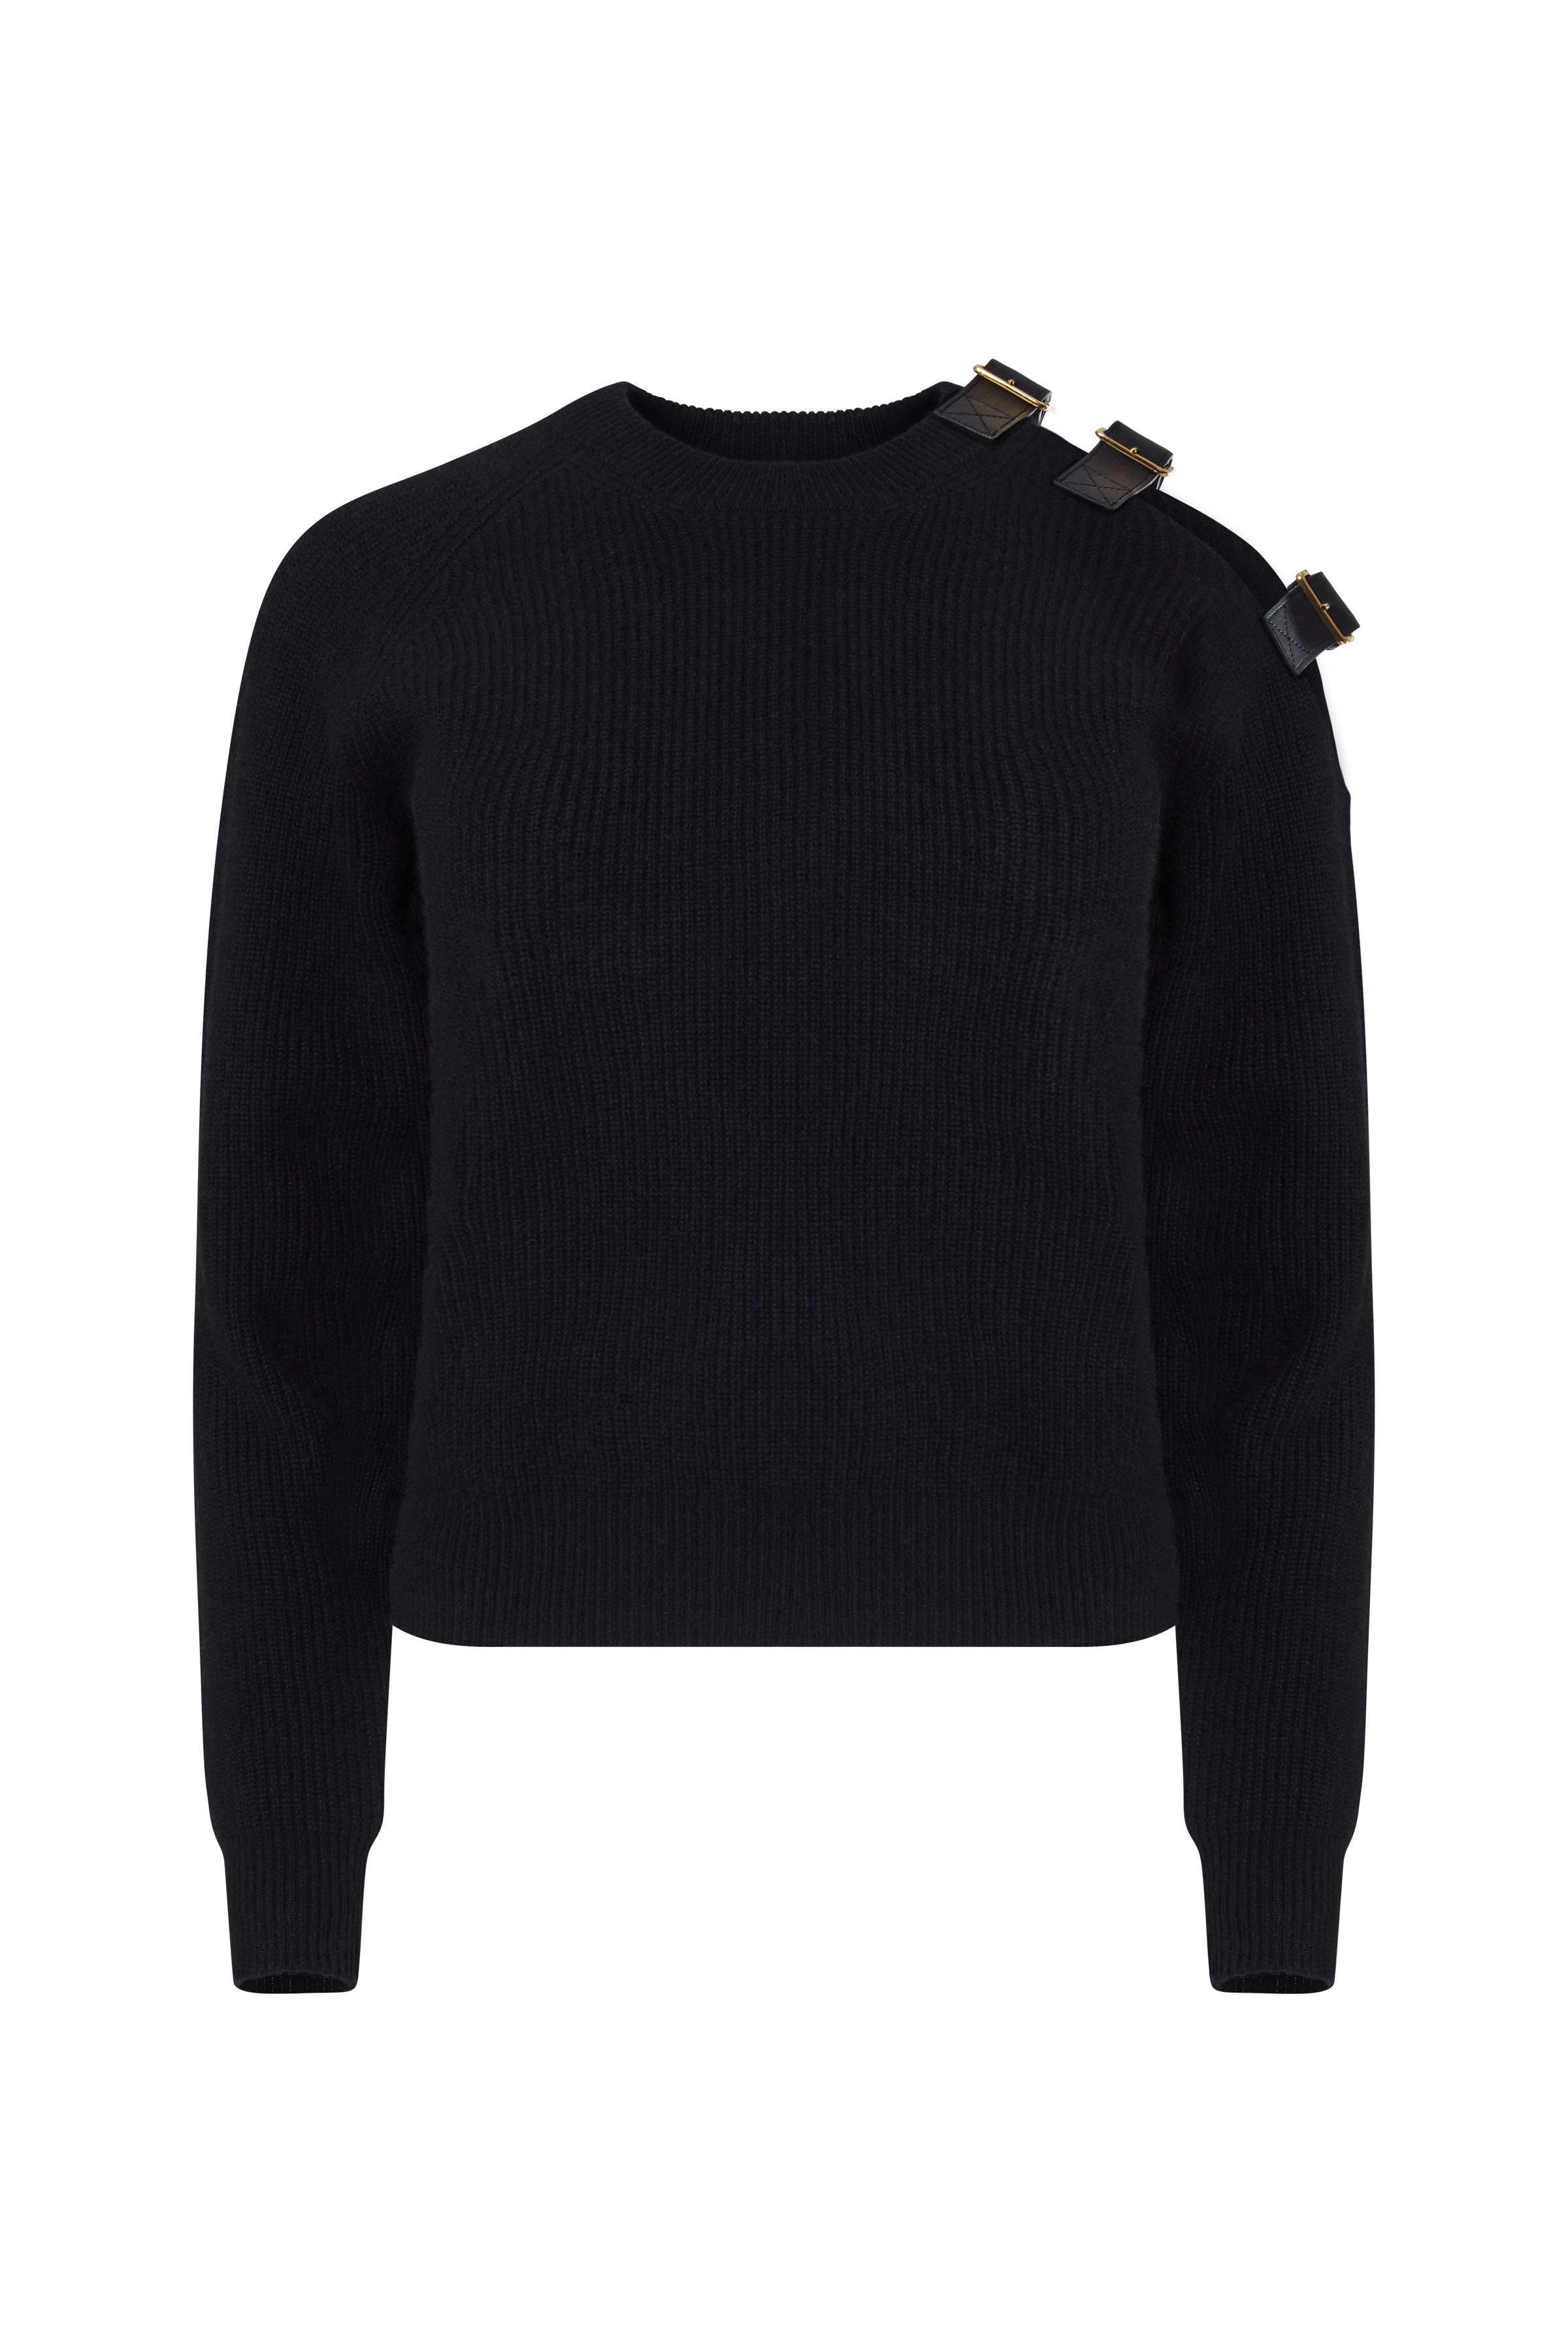 Louis Vuitton LV Medallion Socks Black Cashmere knitted. Size S